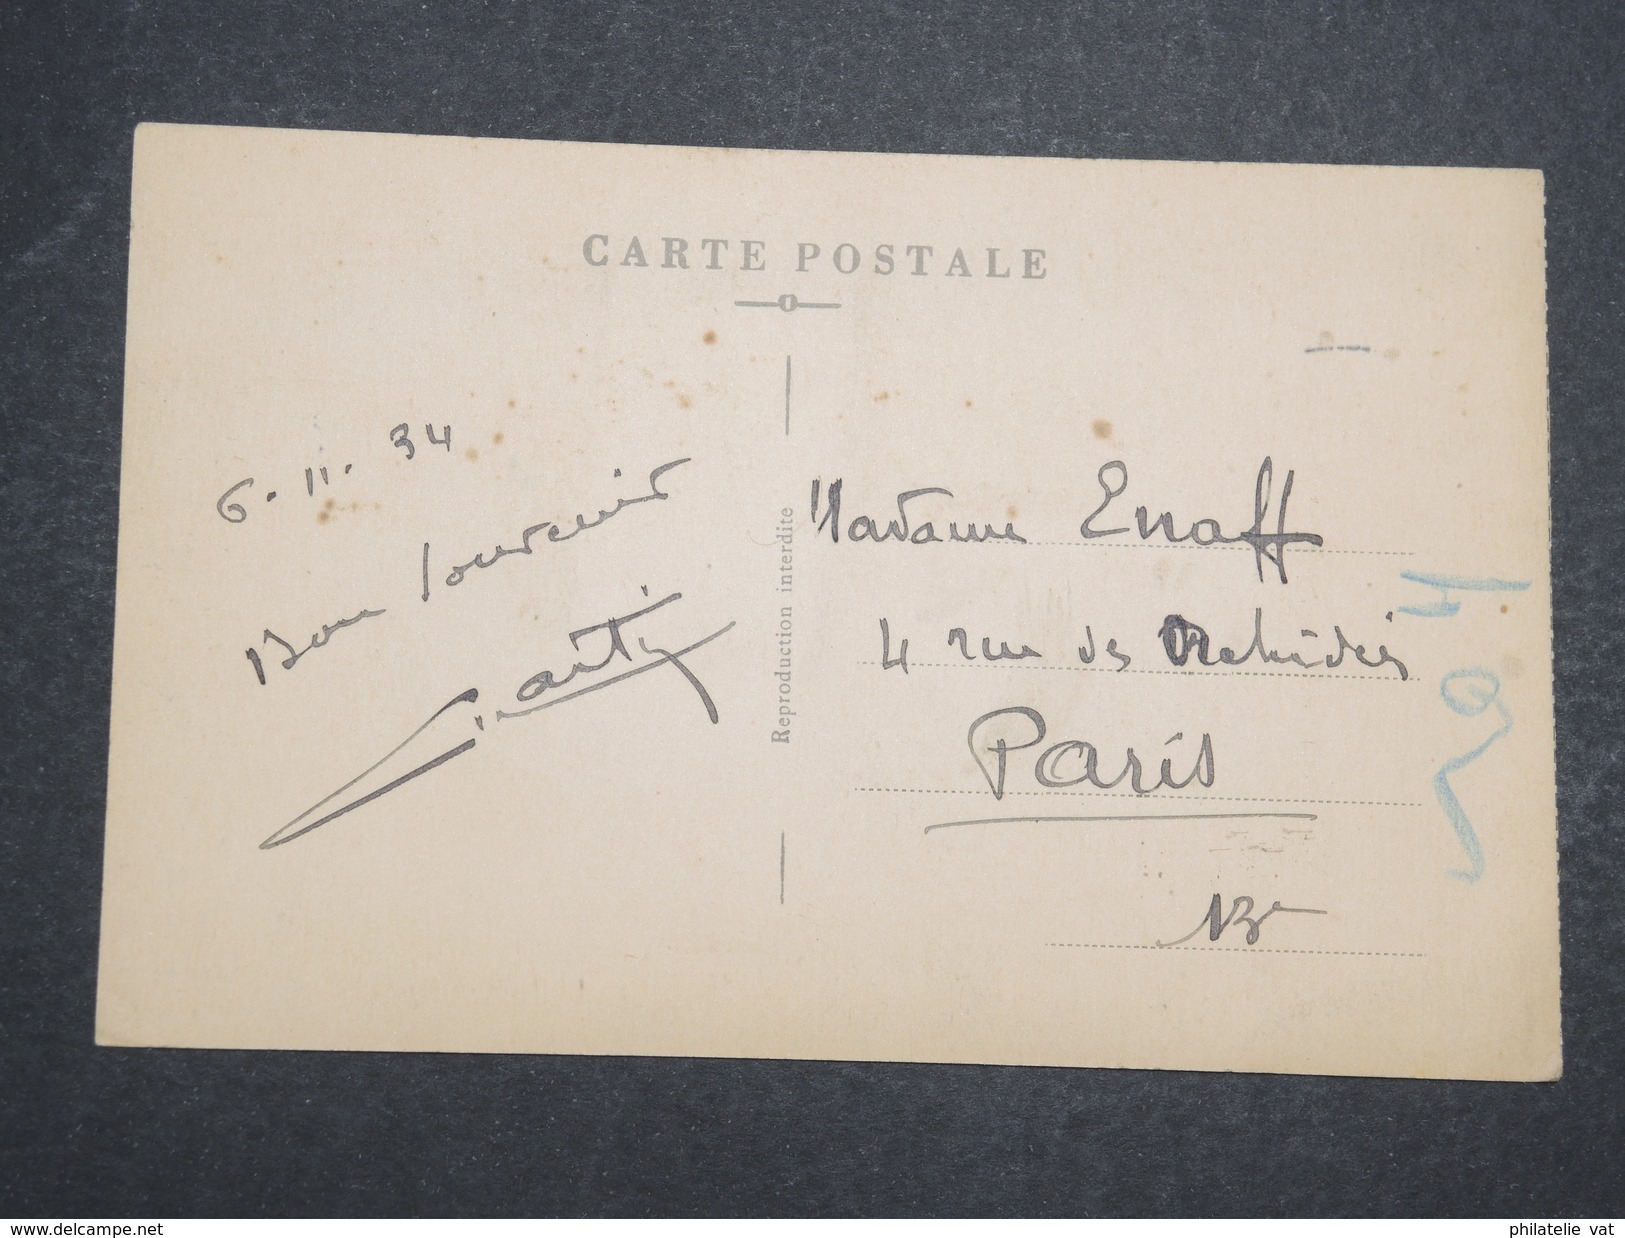 COTE FRANçAISE DES SOMALIS - Carte Postale Djibouti Pour Paris -Nov 1934 - P22098 - Briefe U. Dokumente